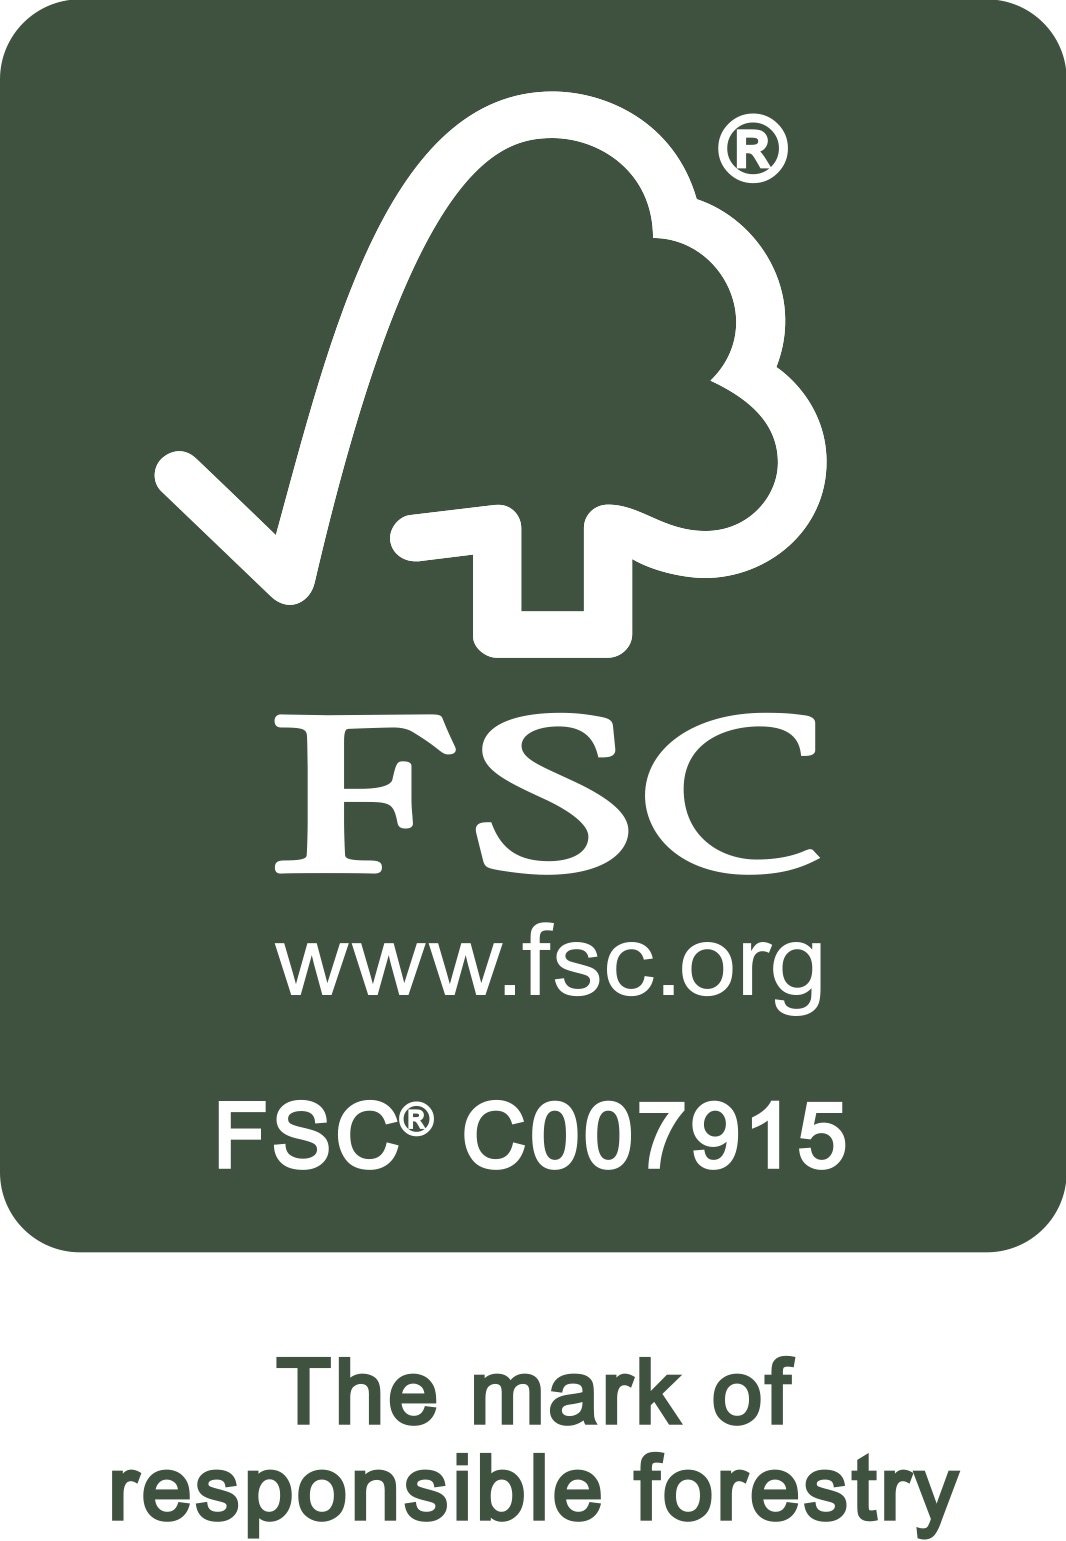 fsc mark of responsible forestry logo